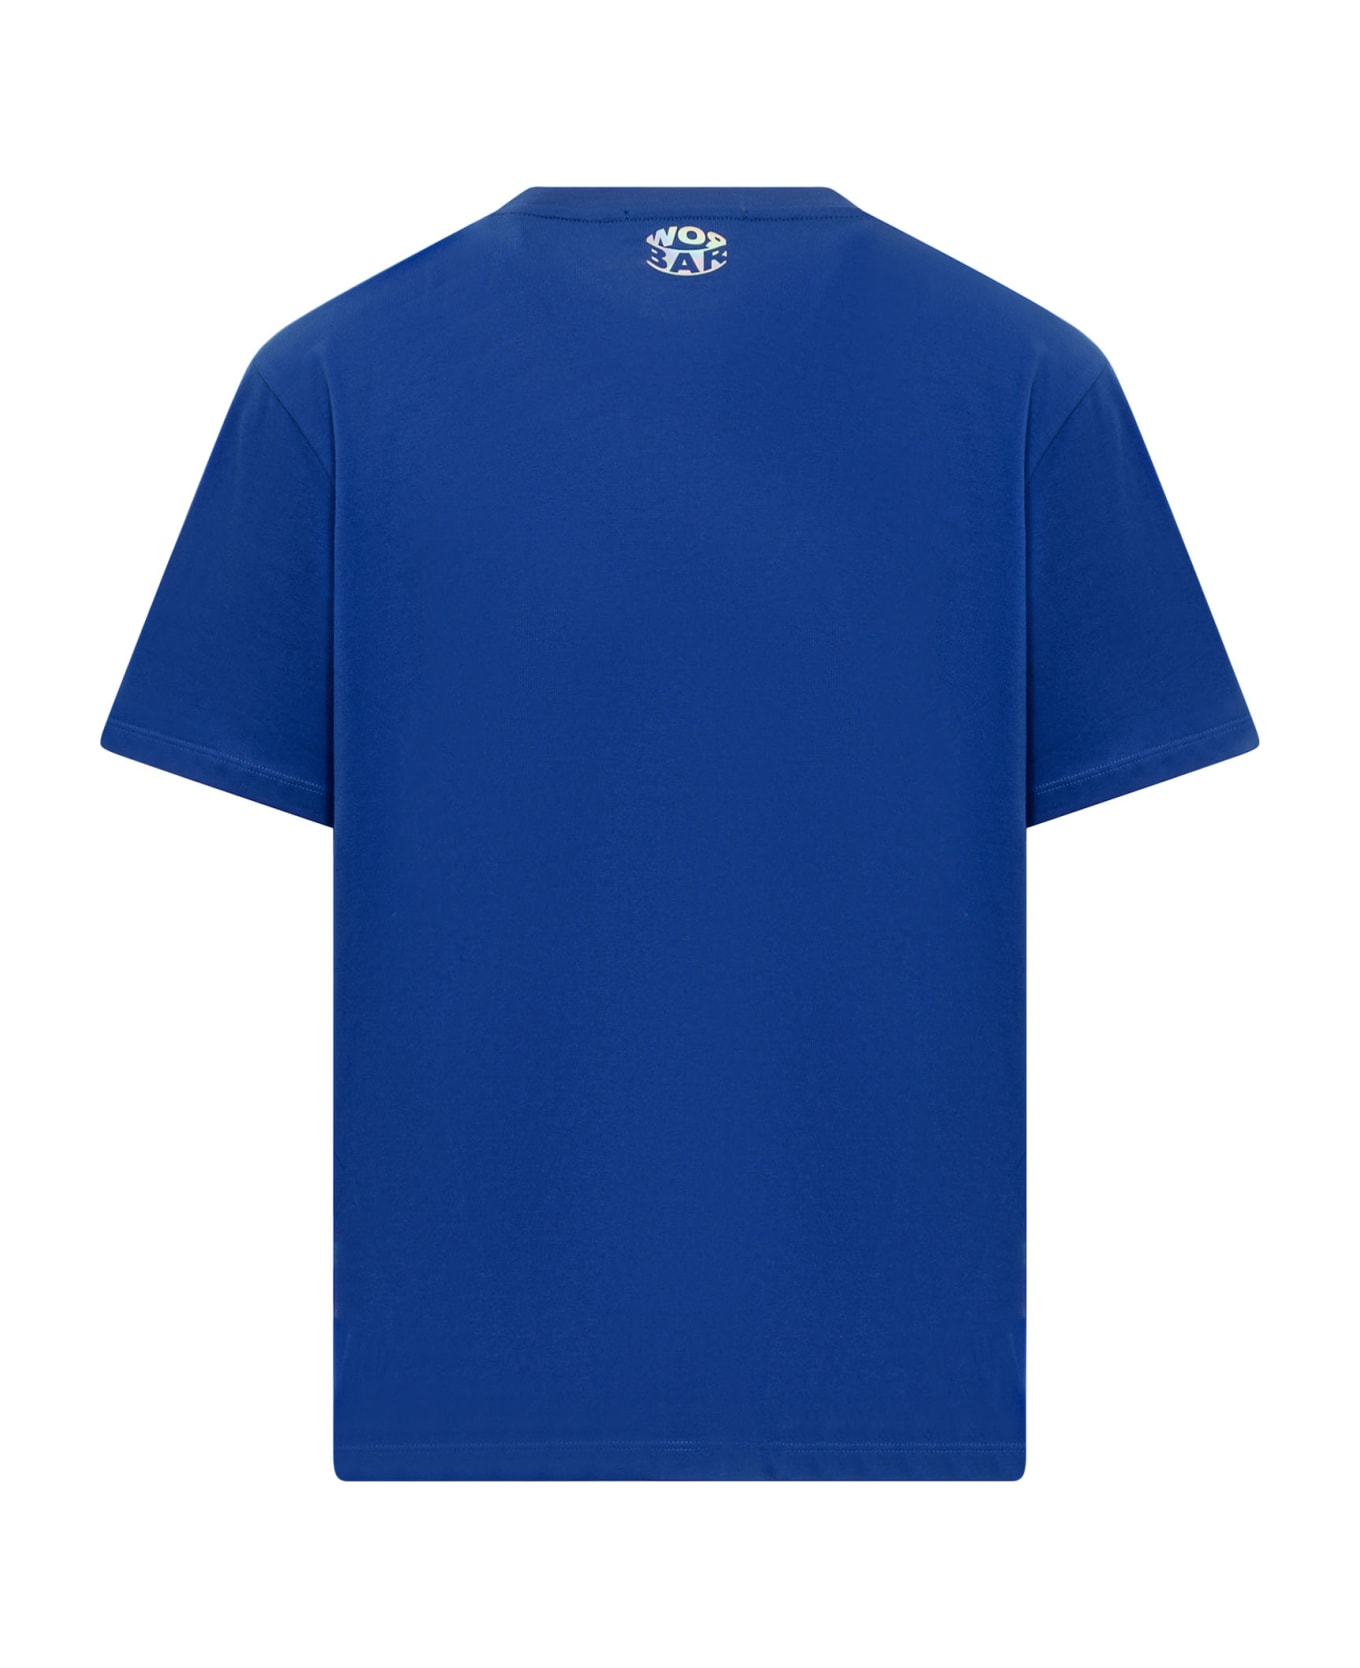 Barrow T-shirt With Logo - DAZZLING BLUE